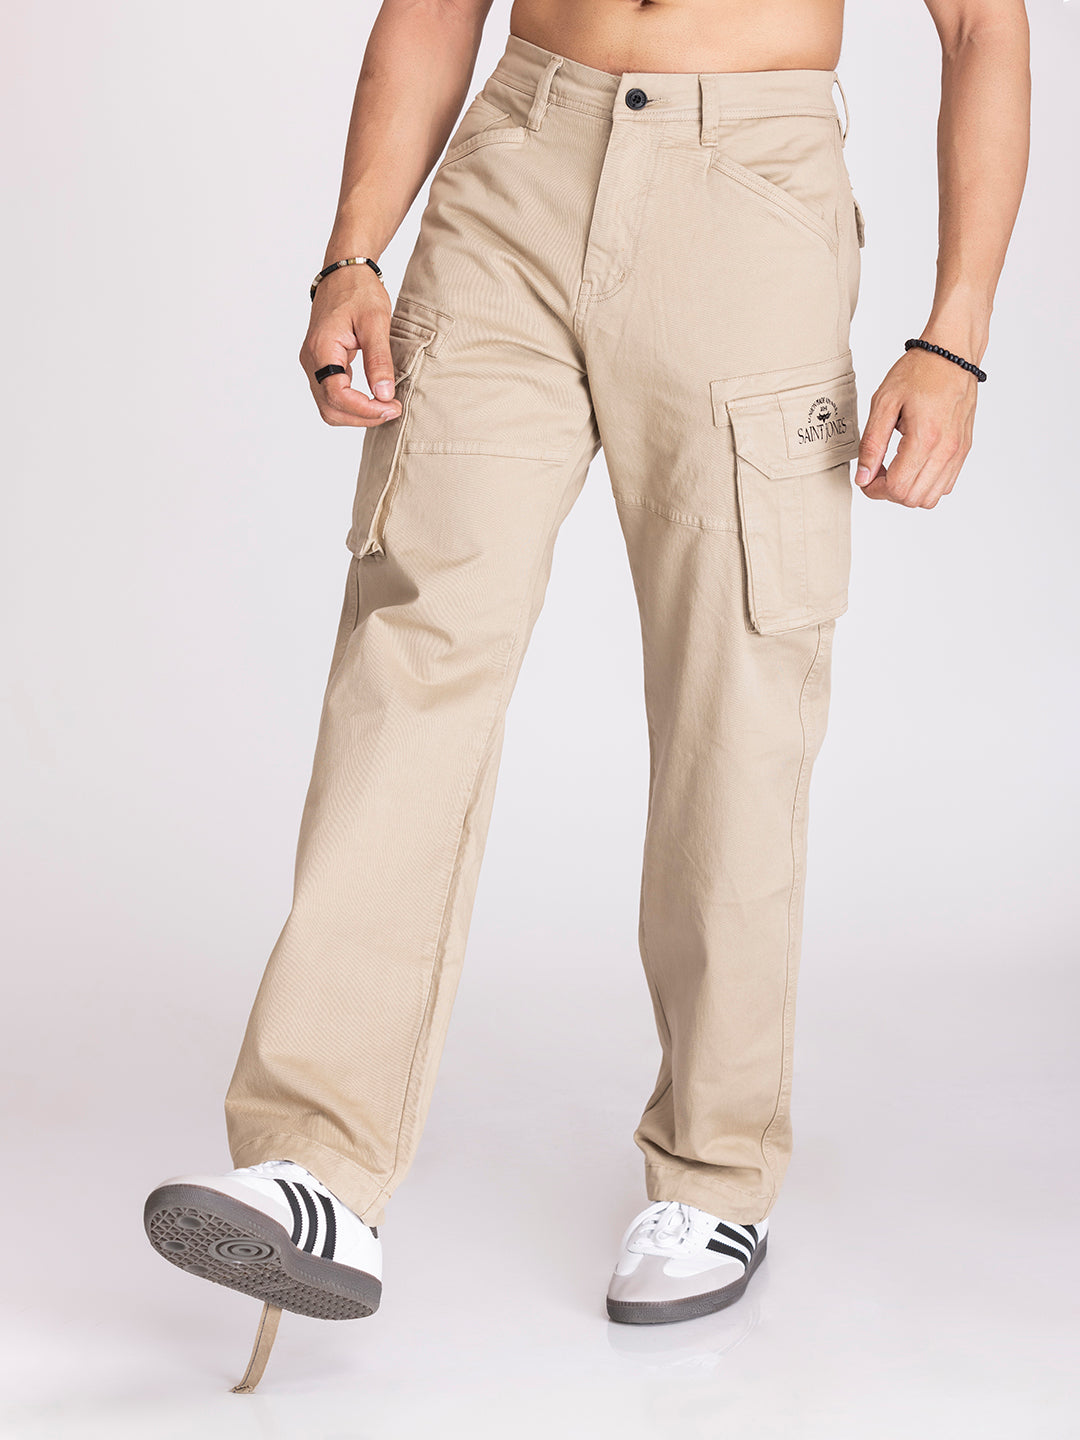 Men's Cargo Pants Cargo Trousers Joggers Trousers 6 Pocket Plain Comfort  Wearable Casual Daily Holiday Sports Fashion Black Army Green 2024 - $22.99  | Pantaloni cargo, Uomo casual, Pantaloni